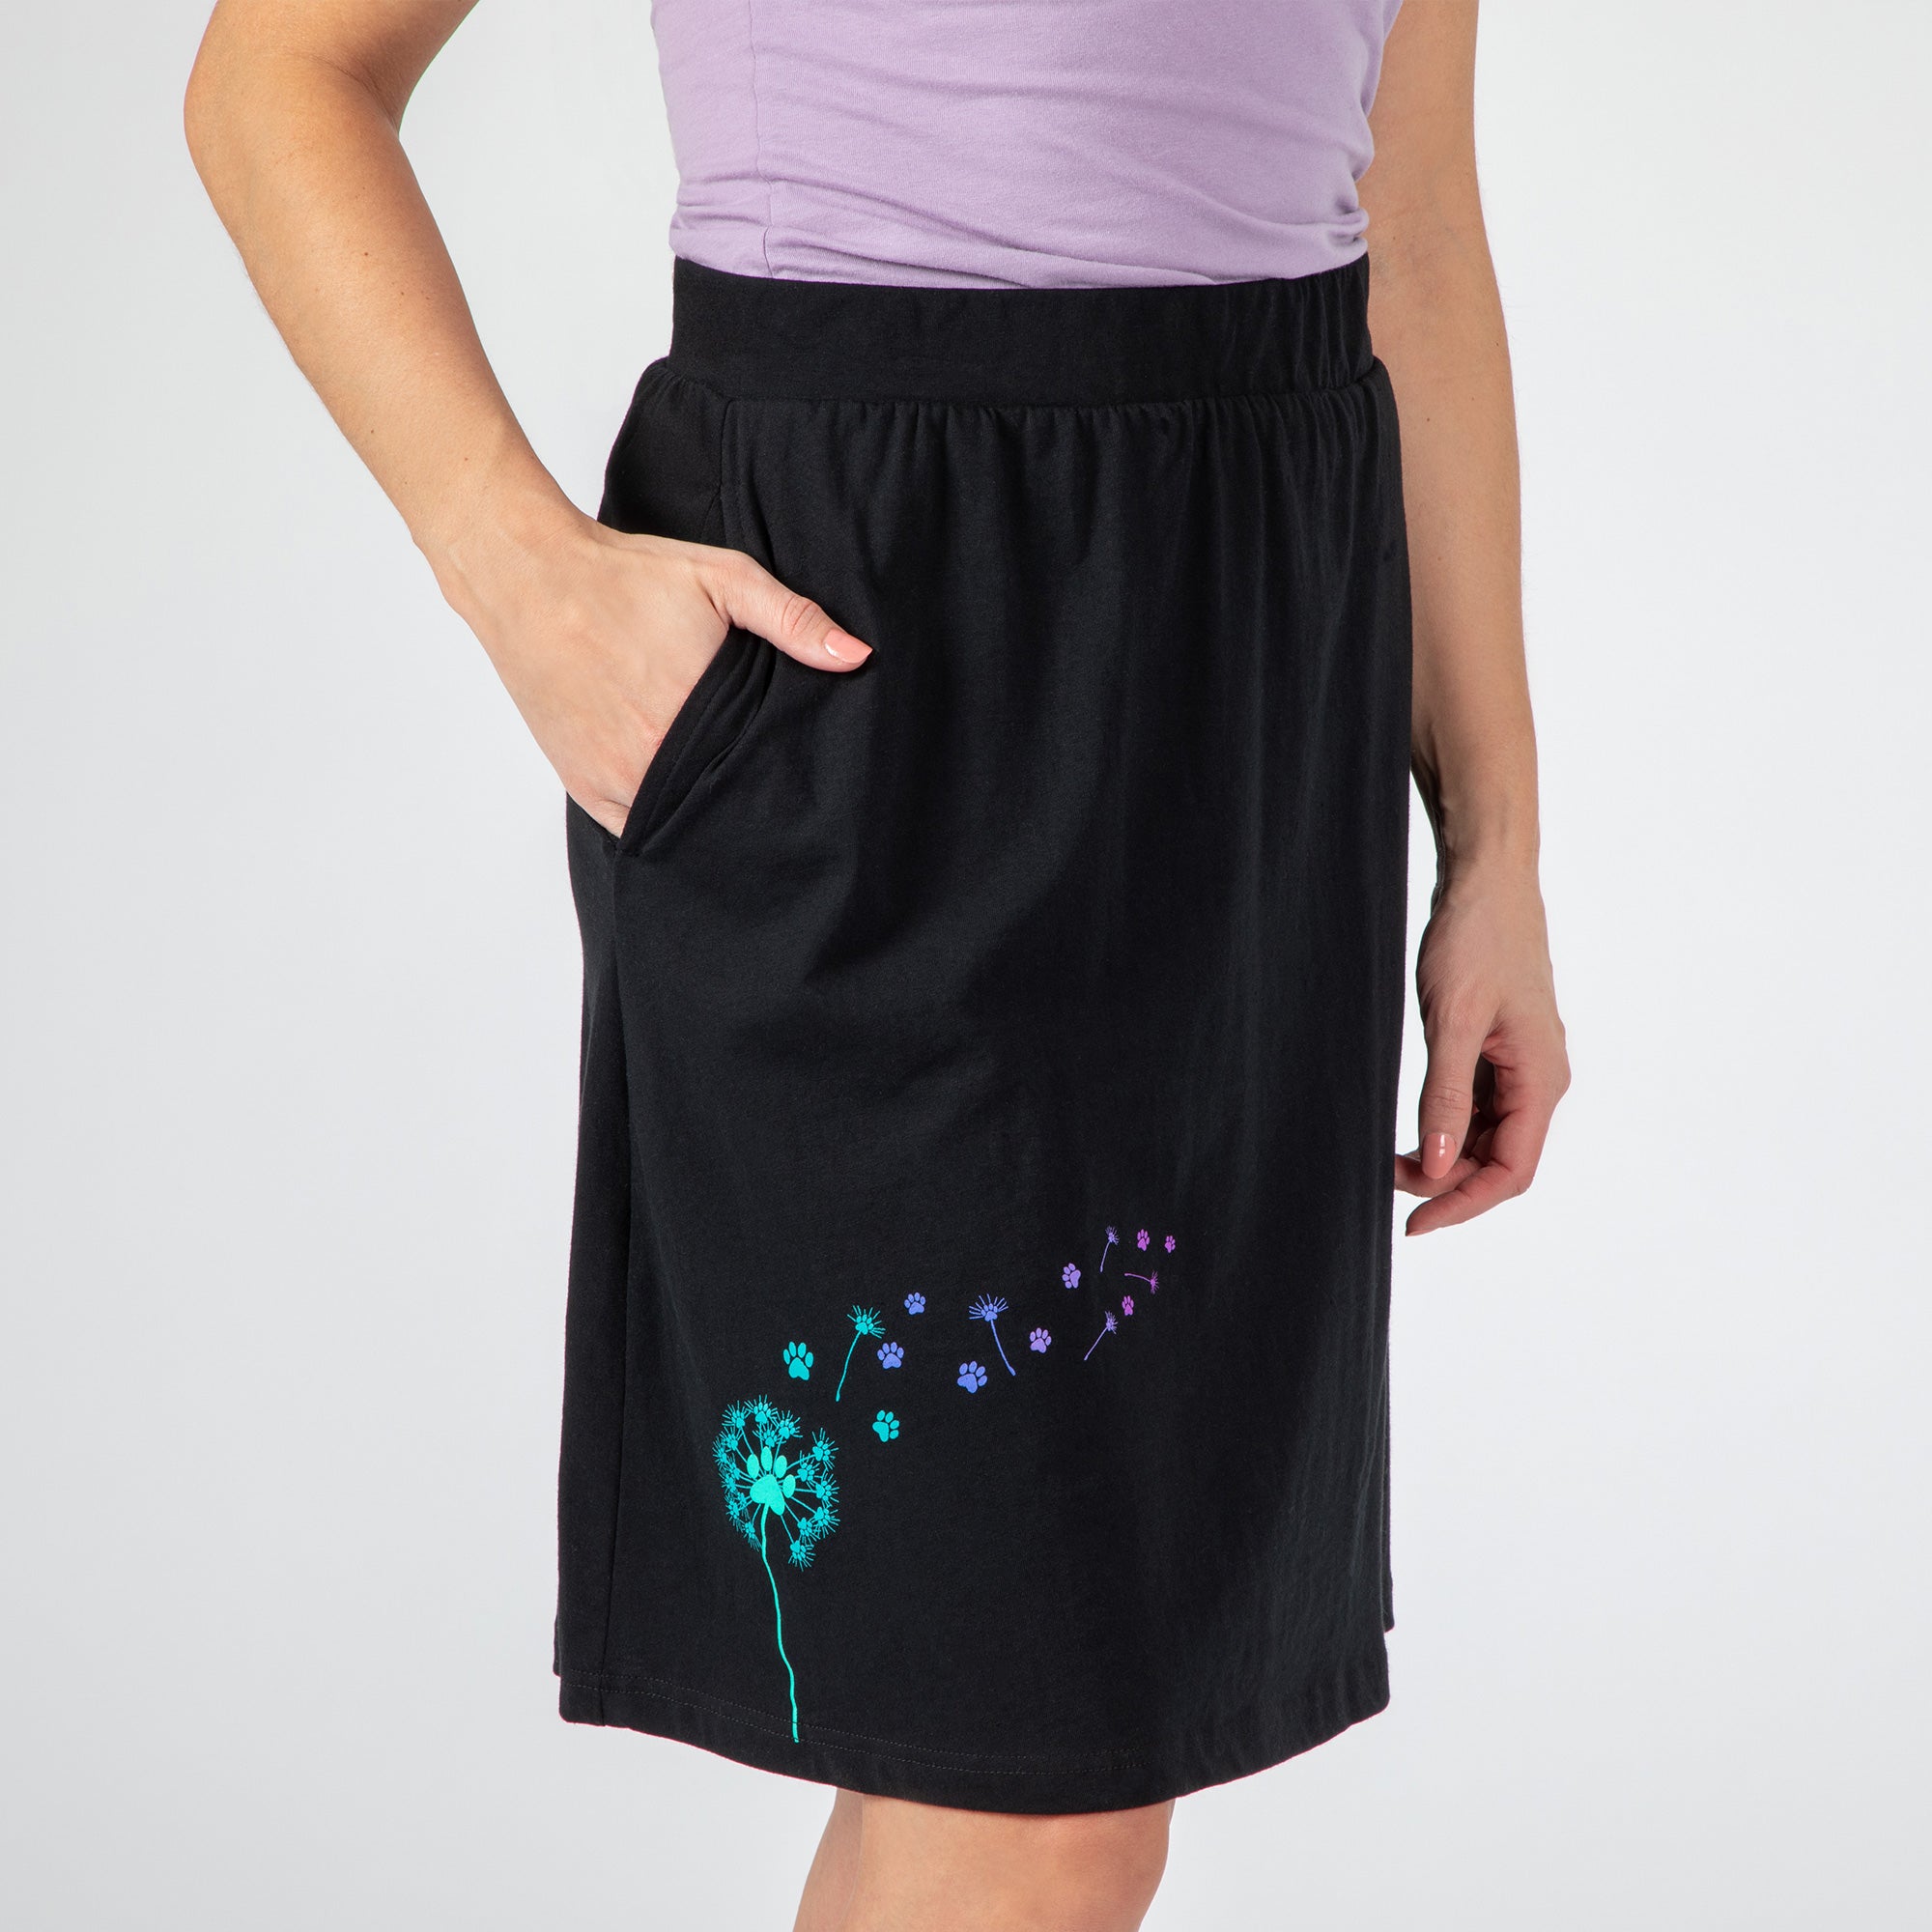 Dandelion Paw Print A-Line Skirt - 2X